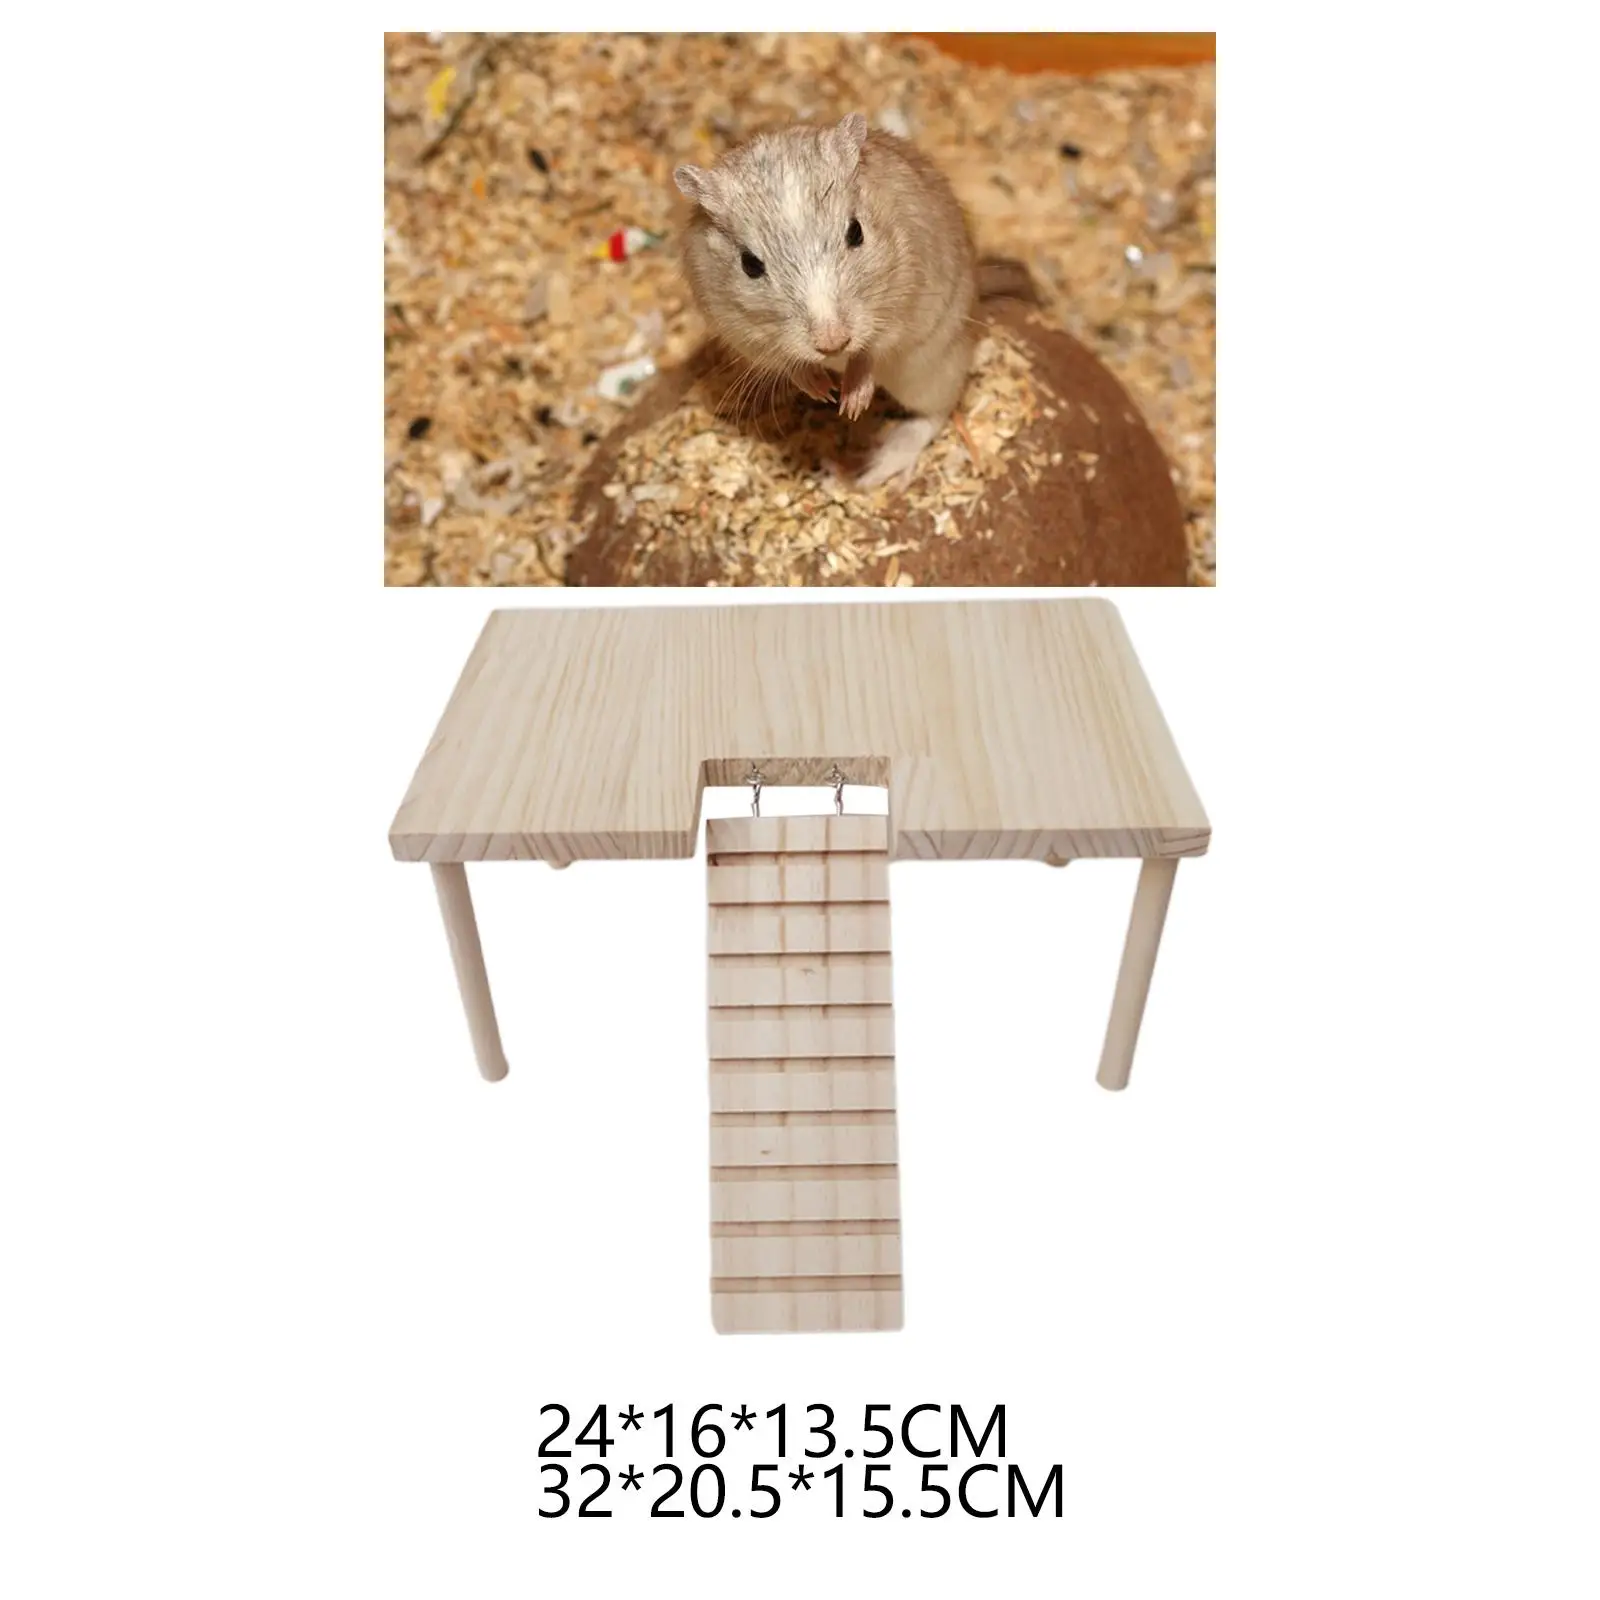 Wooden Small Animal Platform with Ladder Wooden Desk Stand Habitat Decoration